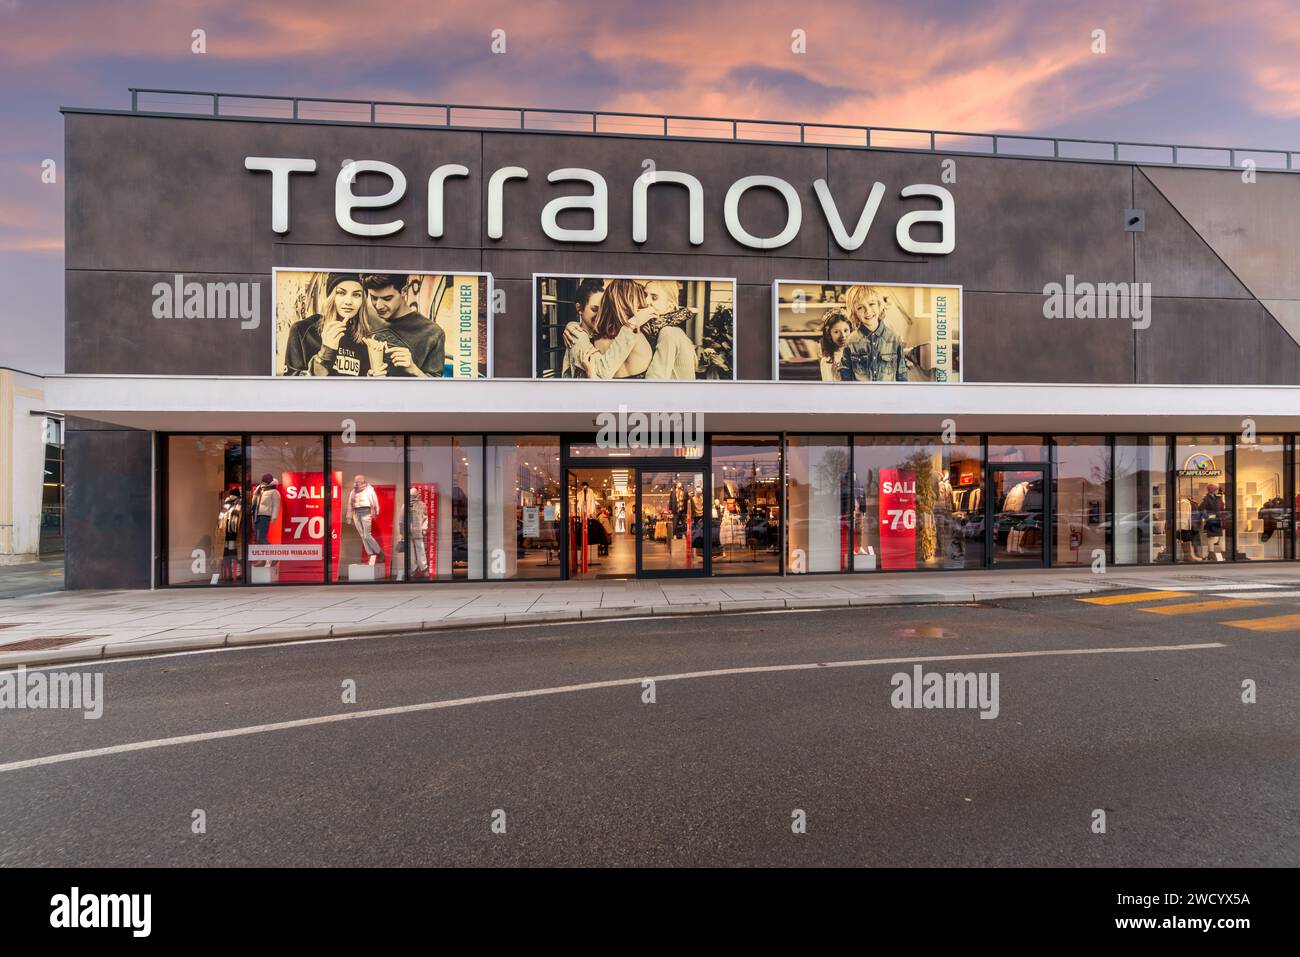 Savigliano, Italy - January 2024: Great Terranova clothing store. Sunset view of the exterior facade with large illuminated windows with large logo si Stock Photo